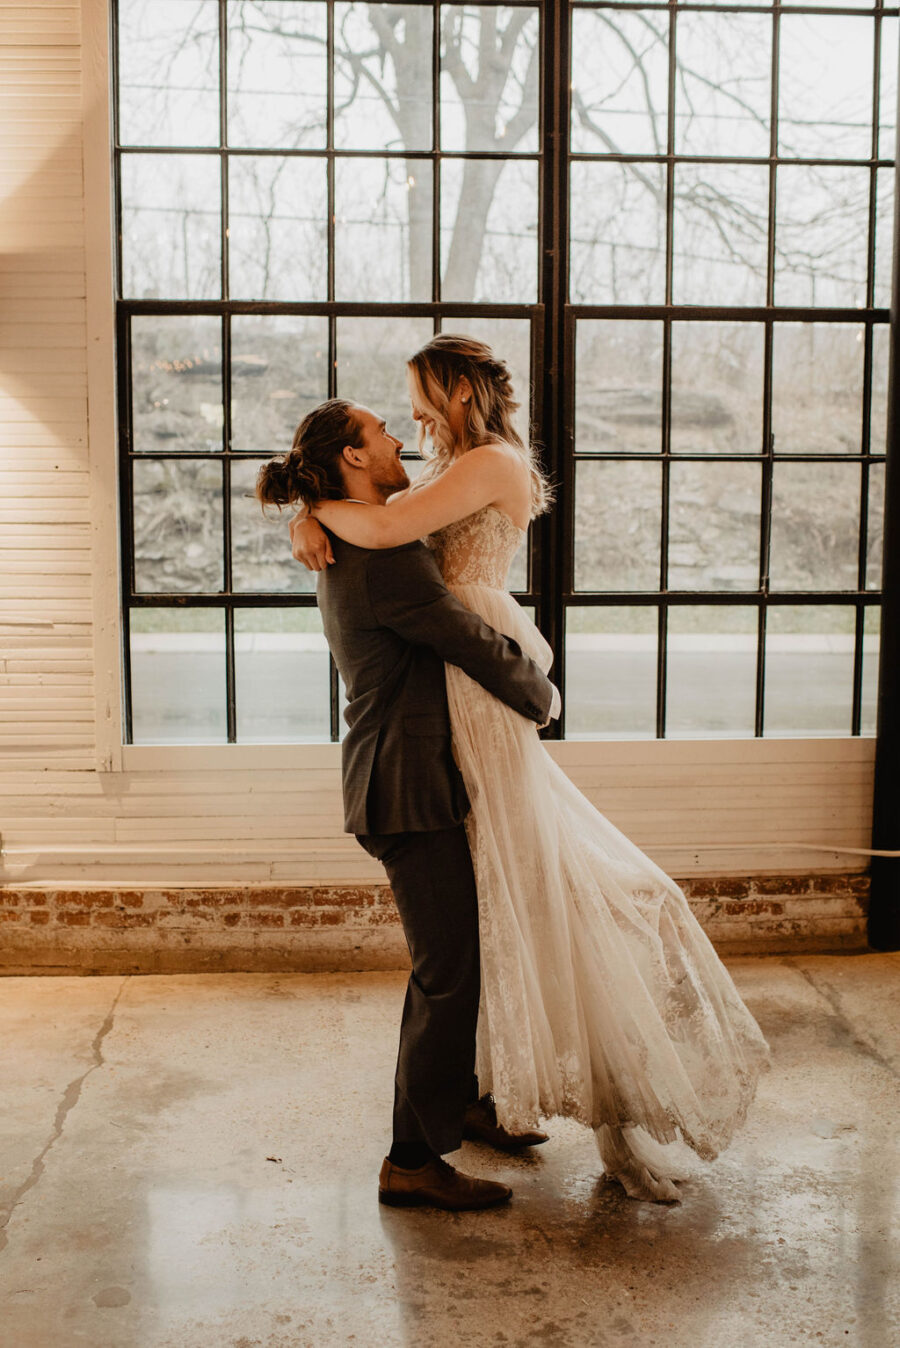 Nashville wedding photographer RenRose Photography | Nashville Bride Guide